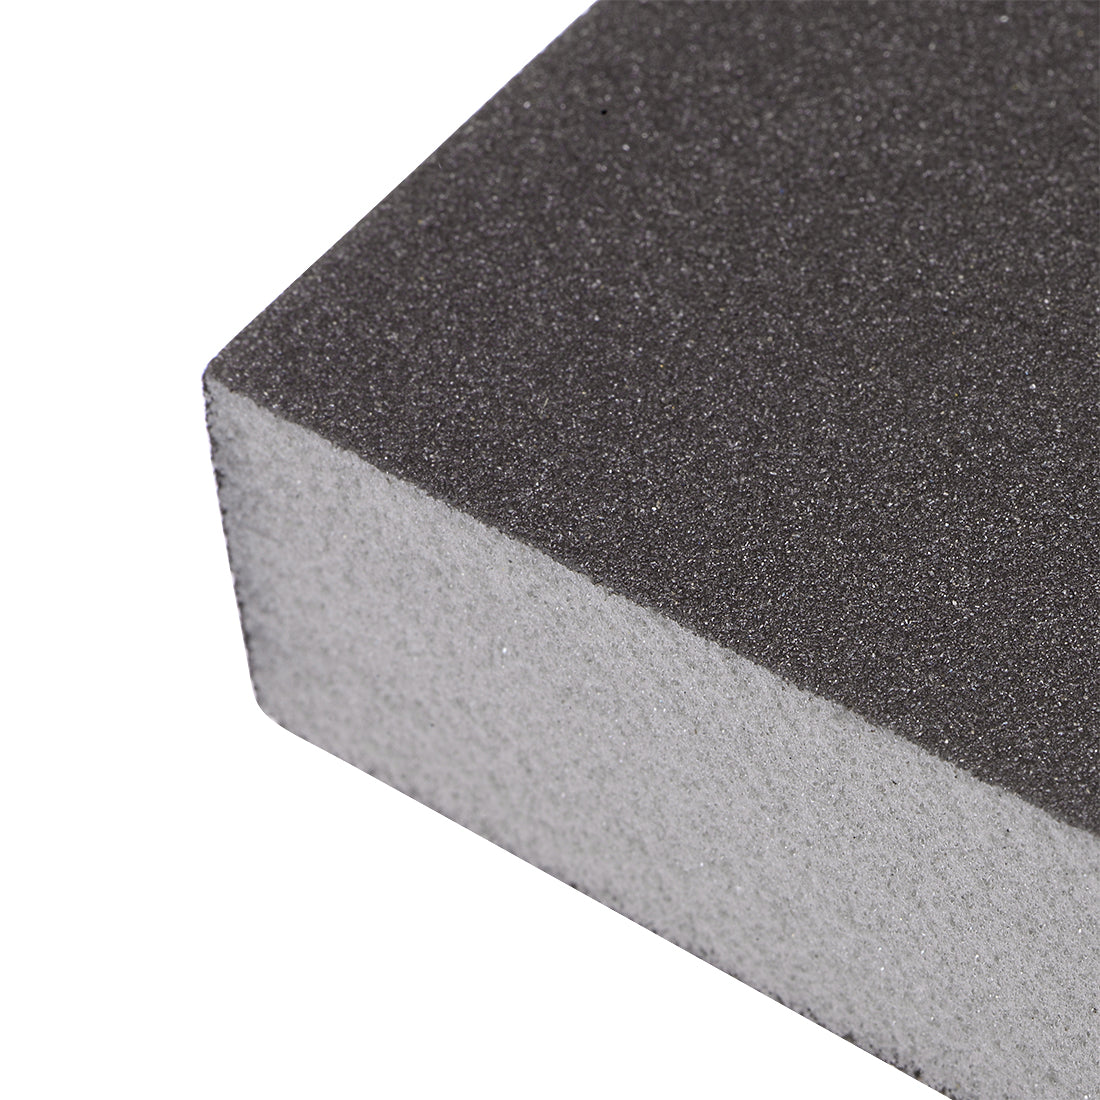 uxcell Uxcell Sanding Sponge Block, 200 Grit, 99mm x 70mm x 25mm